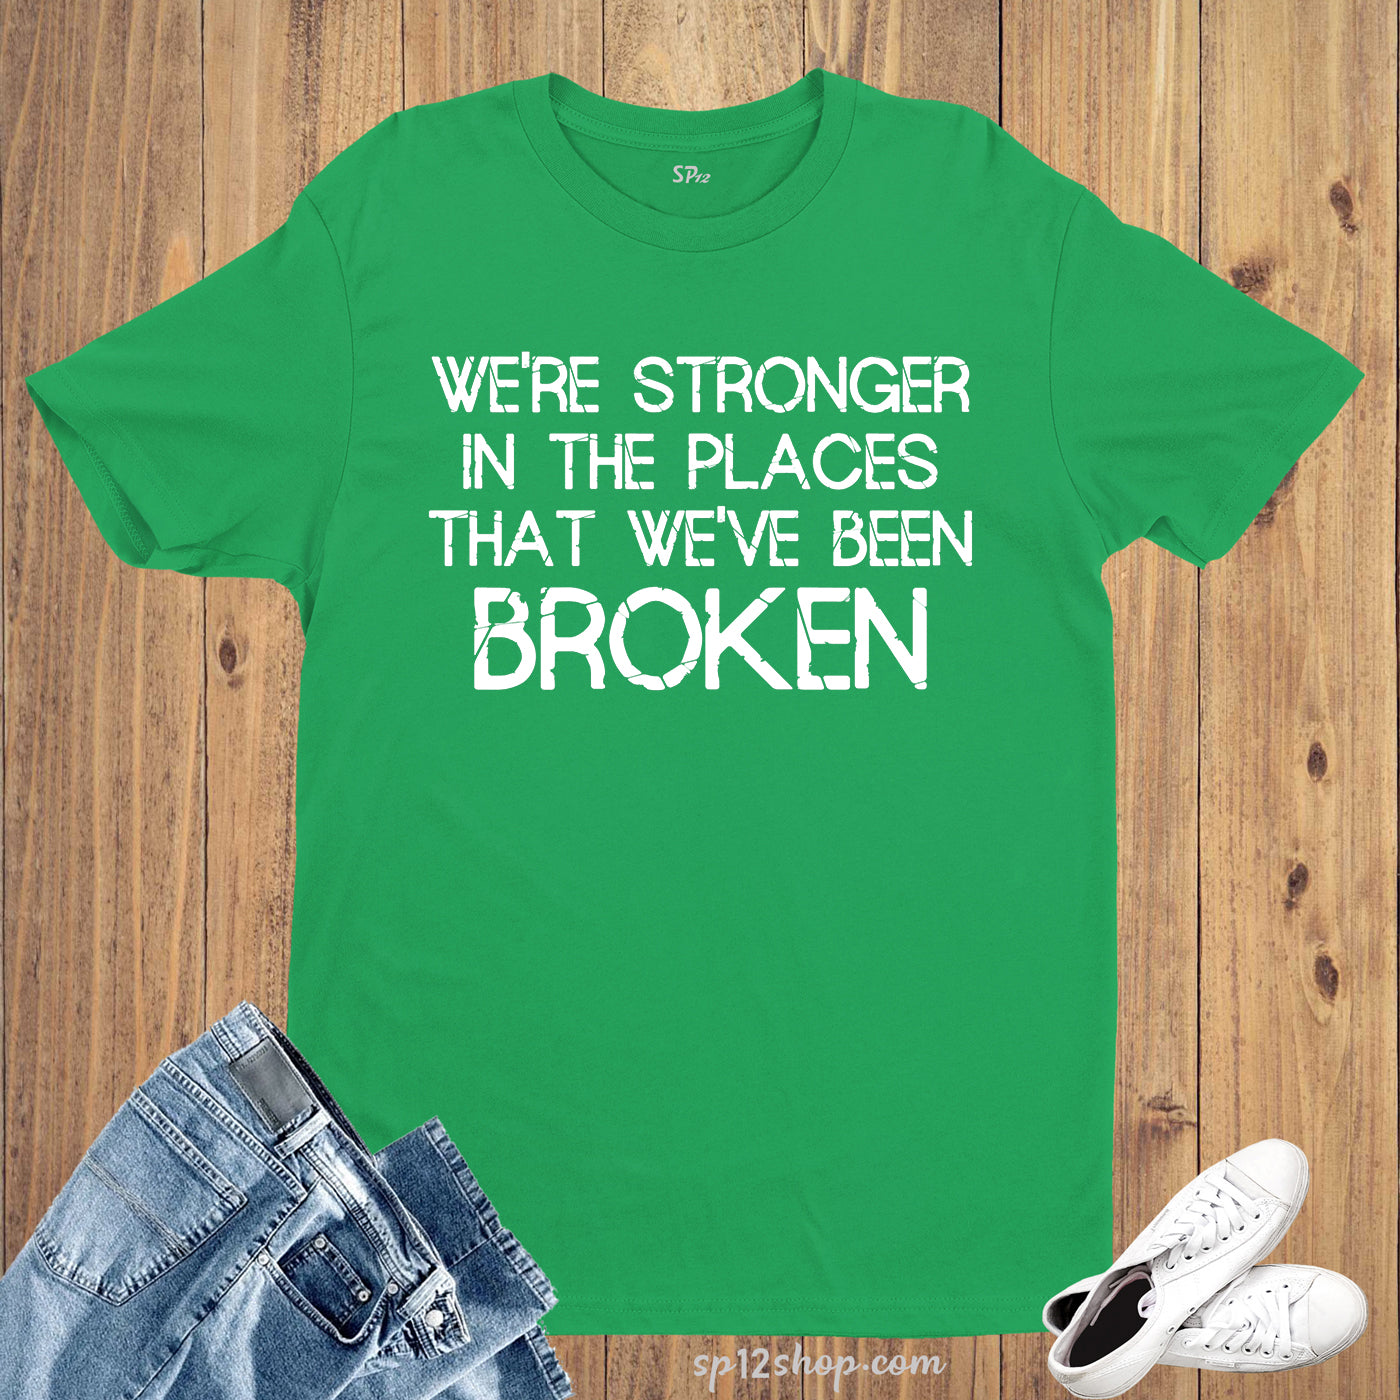 Broken but Stronger Witty Quote Slogan T shirt